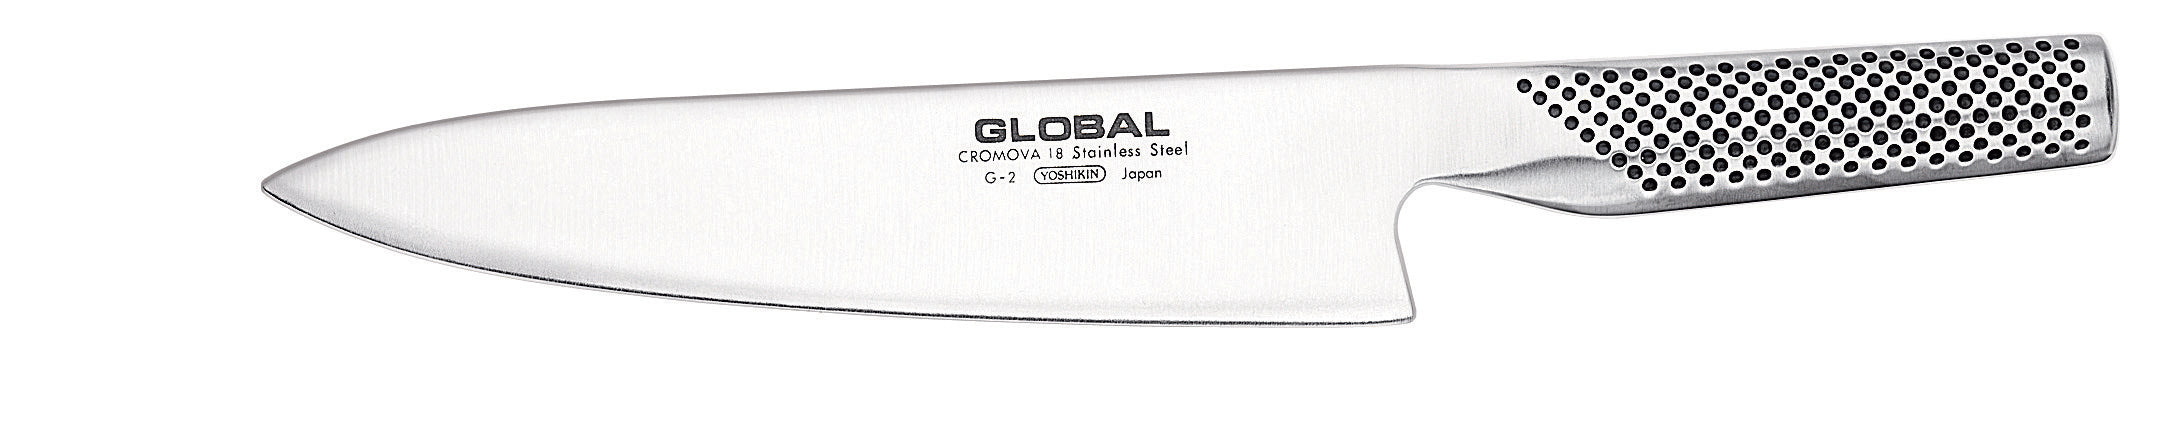 Global Classic 20cm Cooks Knife